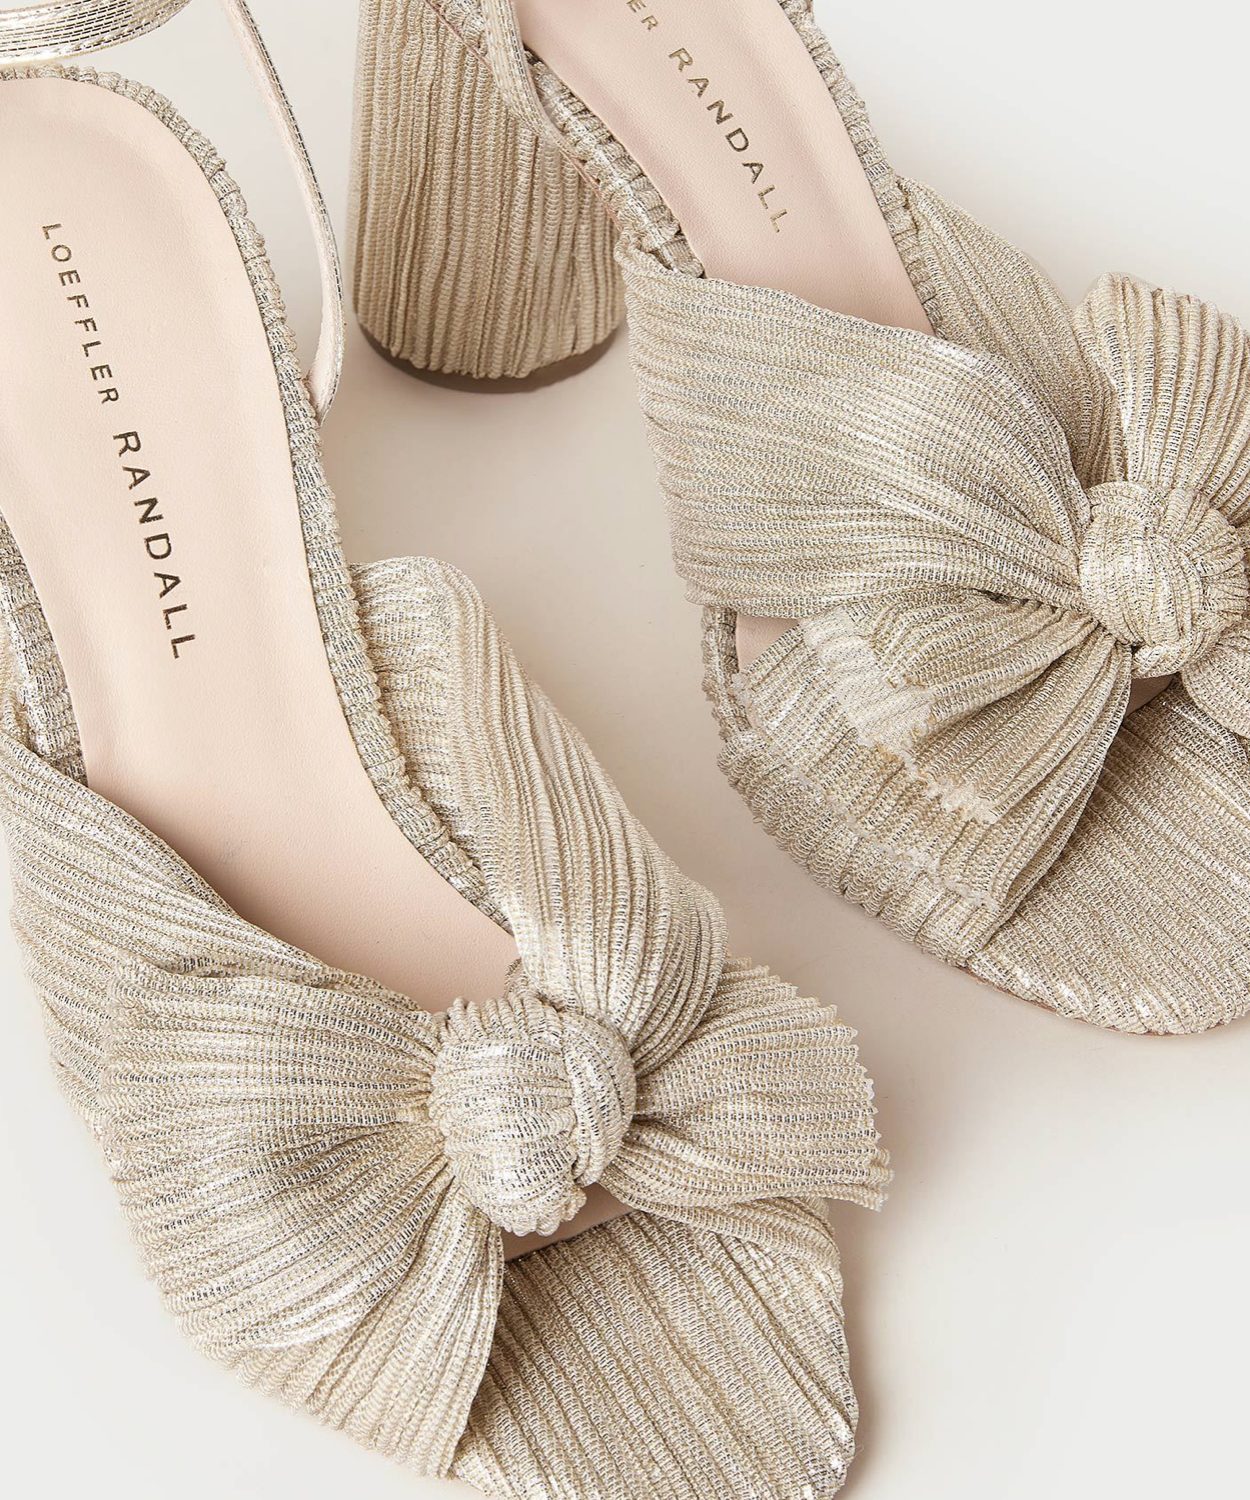 Platinum Camellia Shoes by Loeffler Randall - T H E W H I T E & G O L D